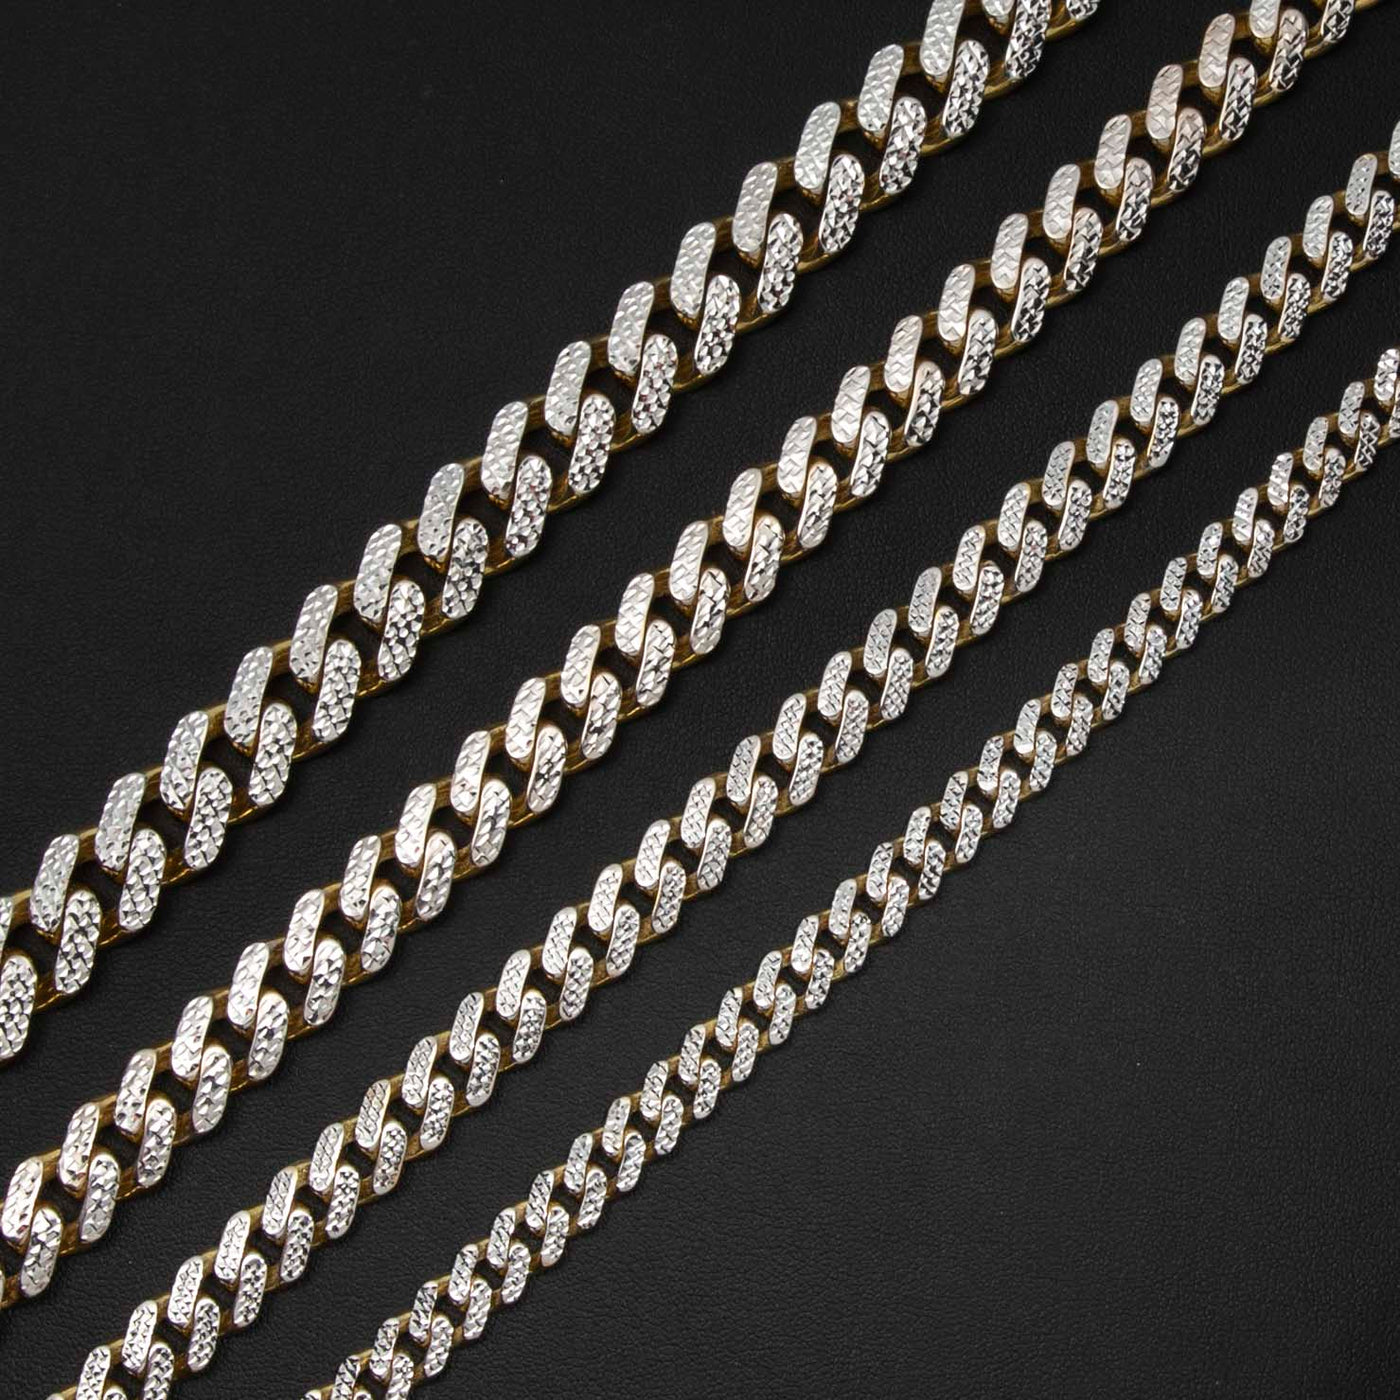 Monaco Chain Diamond Cut Miami Cuban Link Chain Necklace 14K Yellow White Gold - Hollow